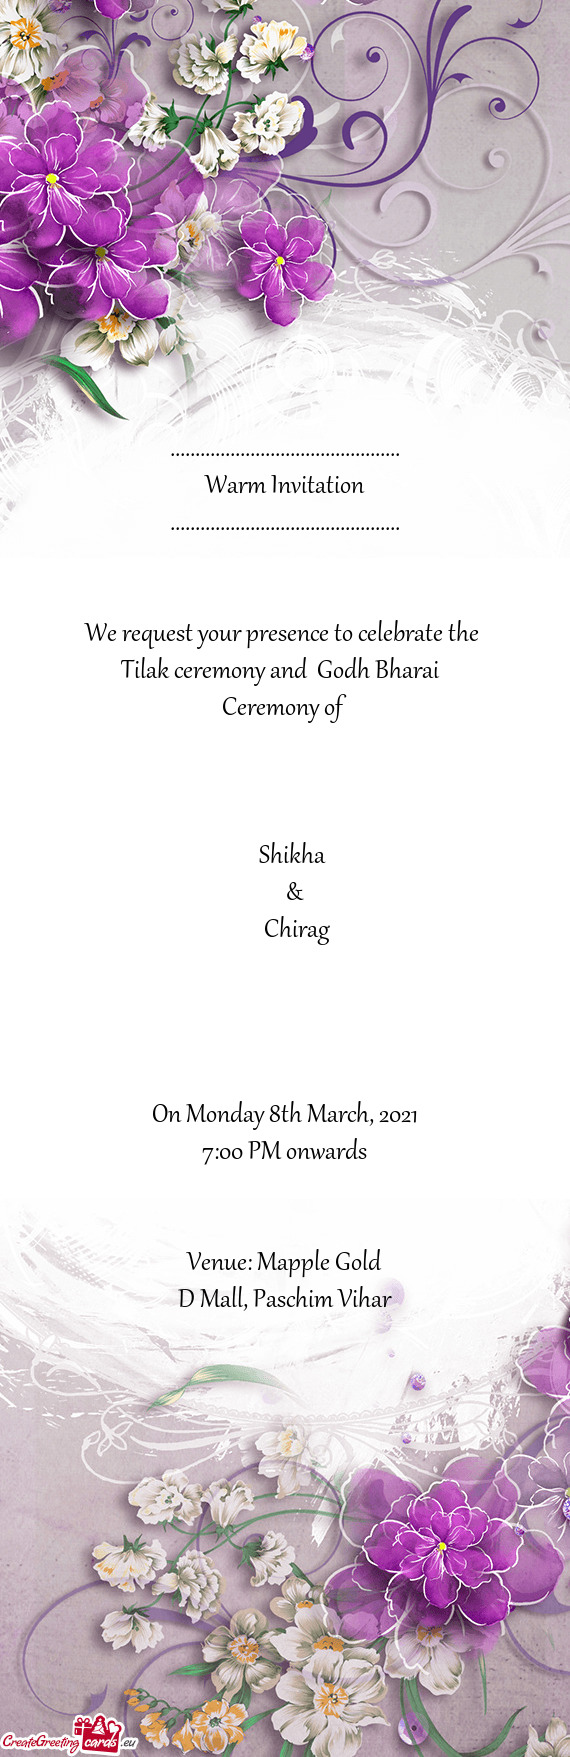 Tilak ceremony and Godh Bharai